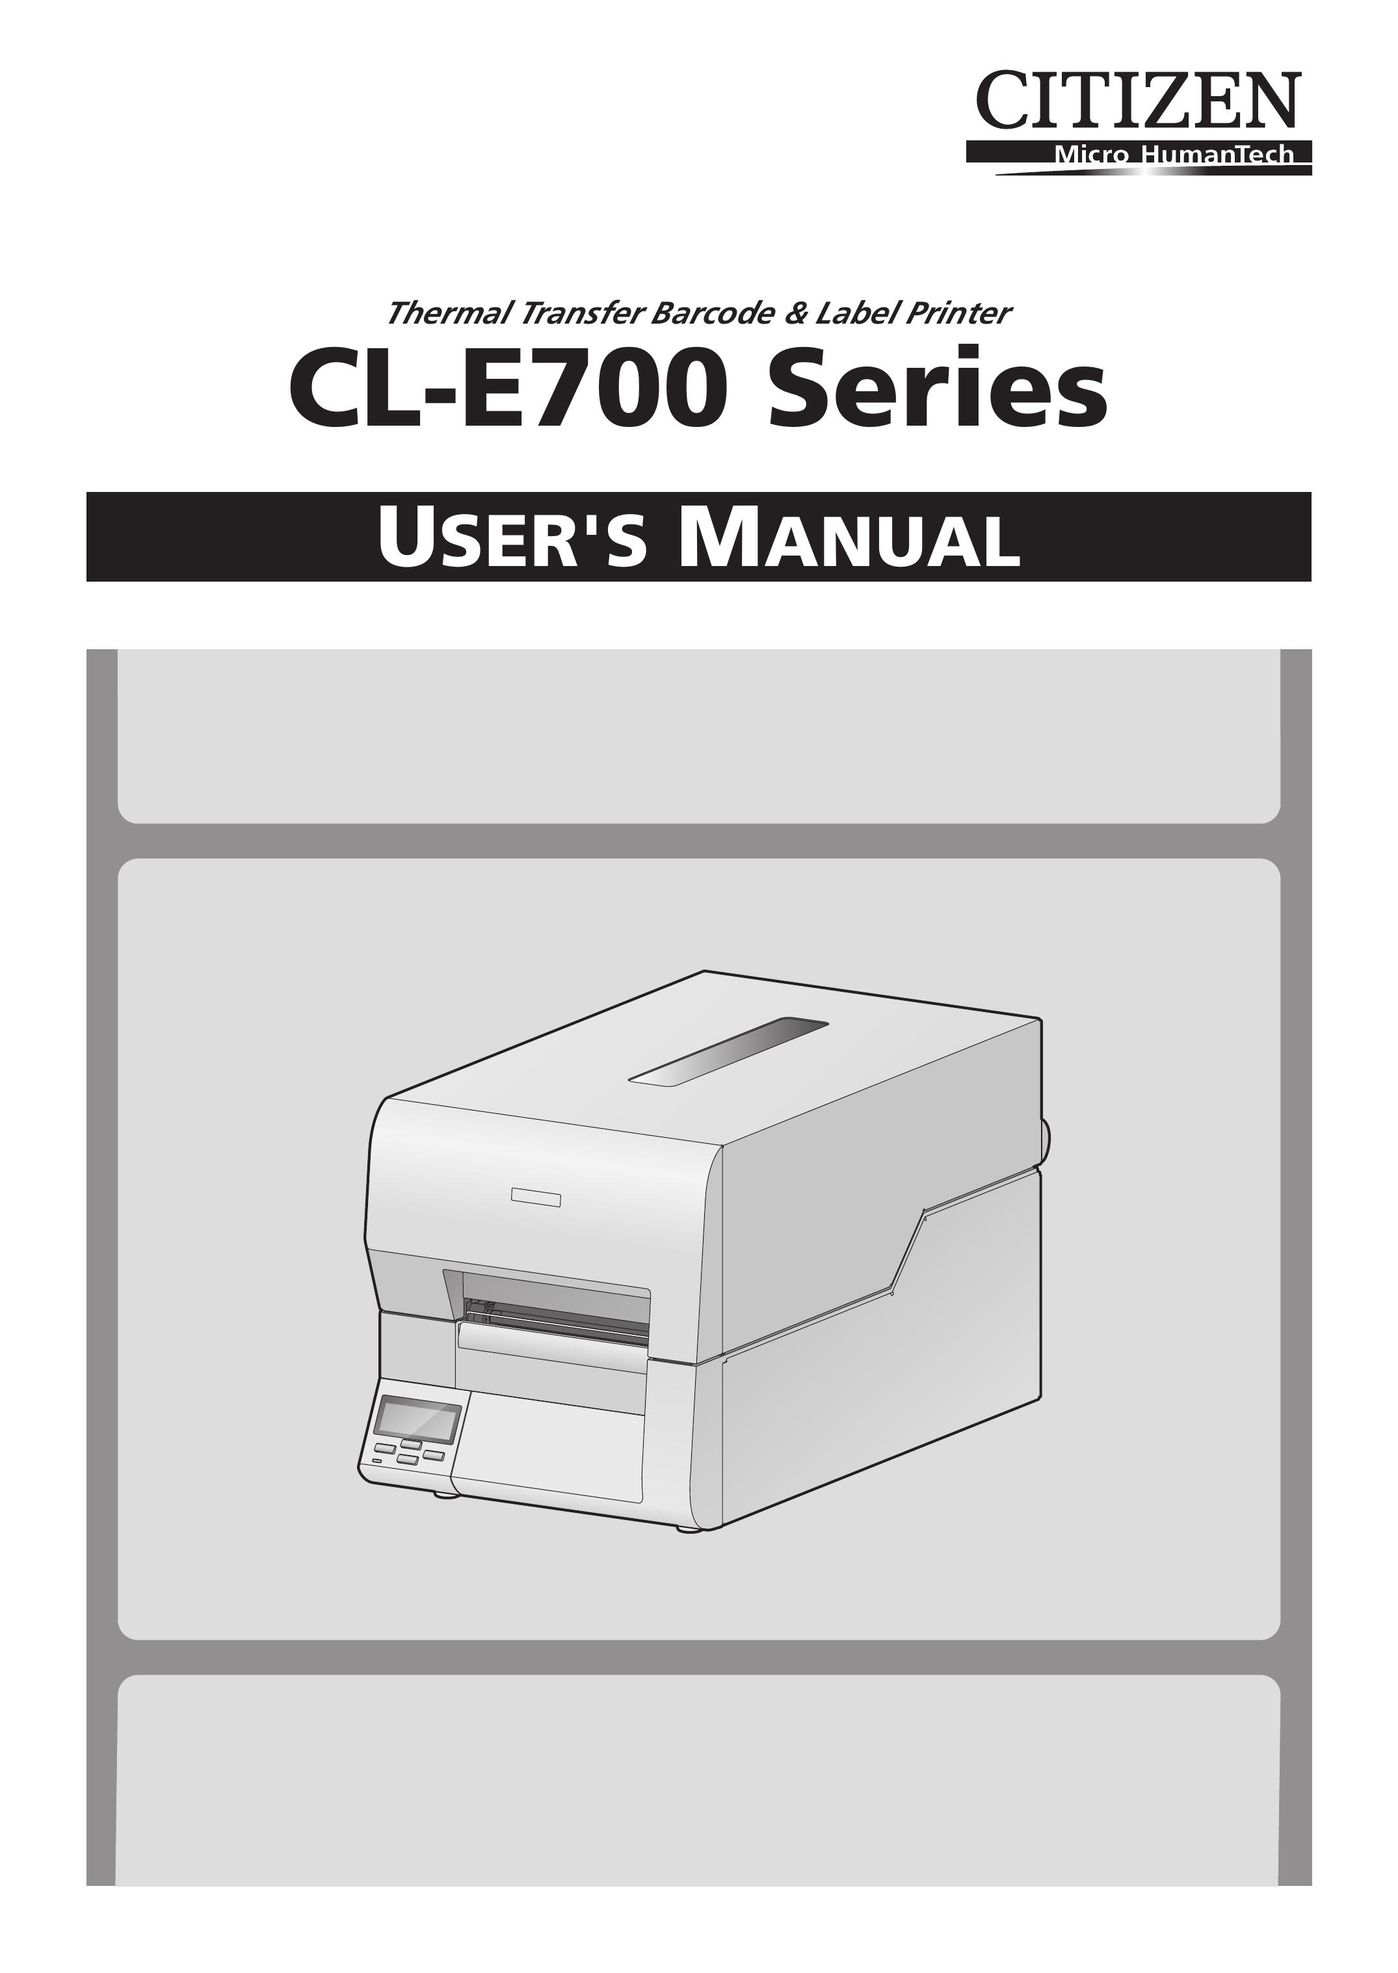 Citizen CL-E700 Series All in One Printer User Manual